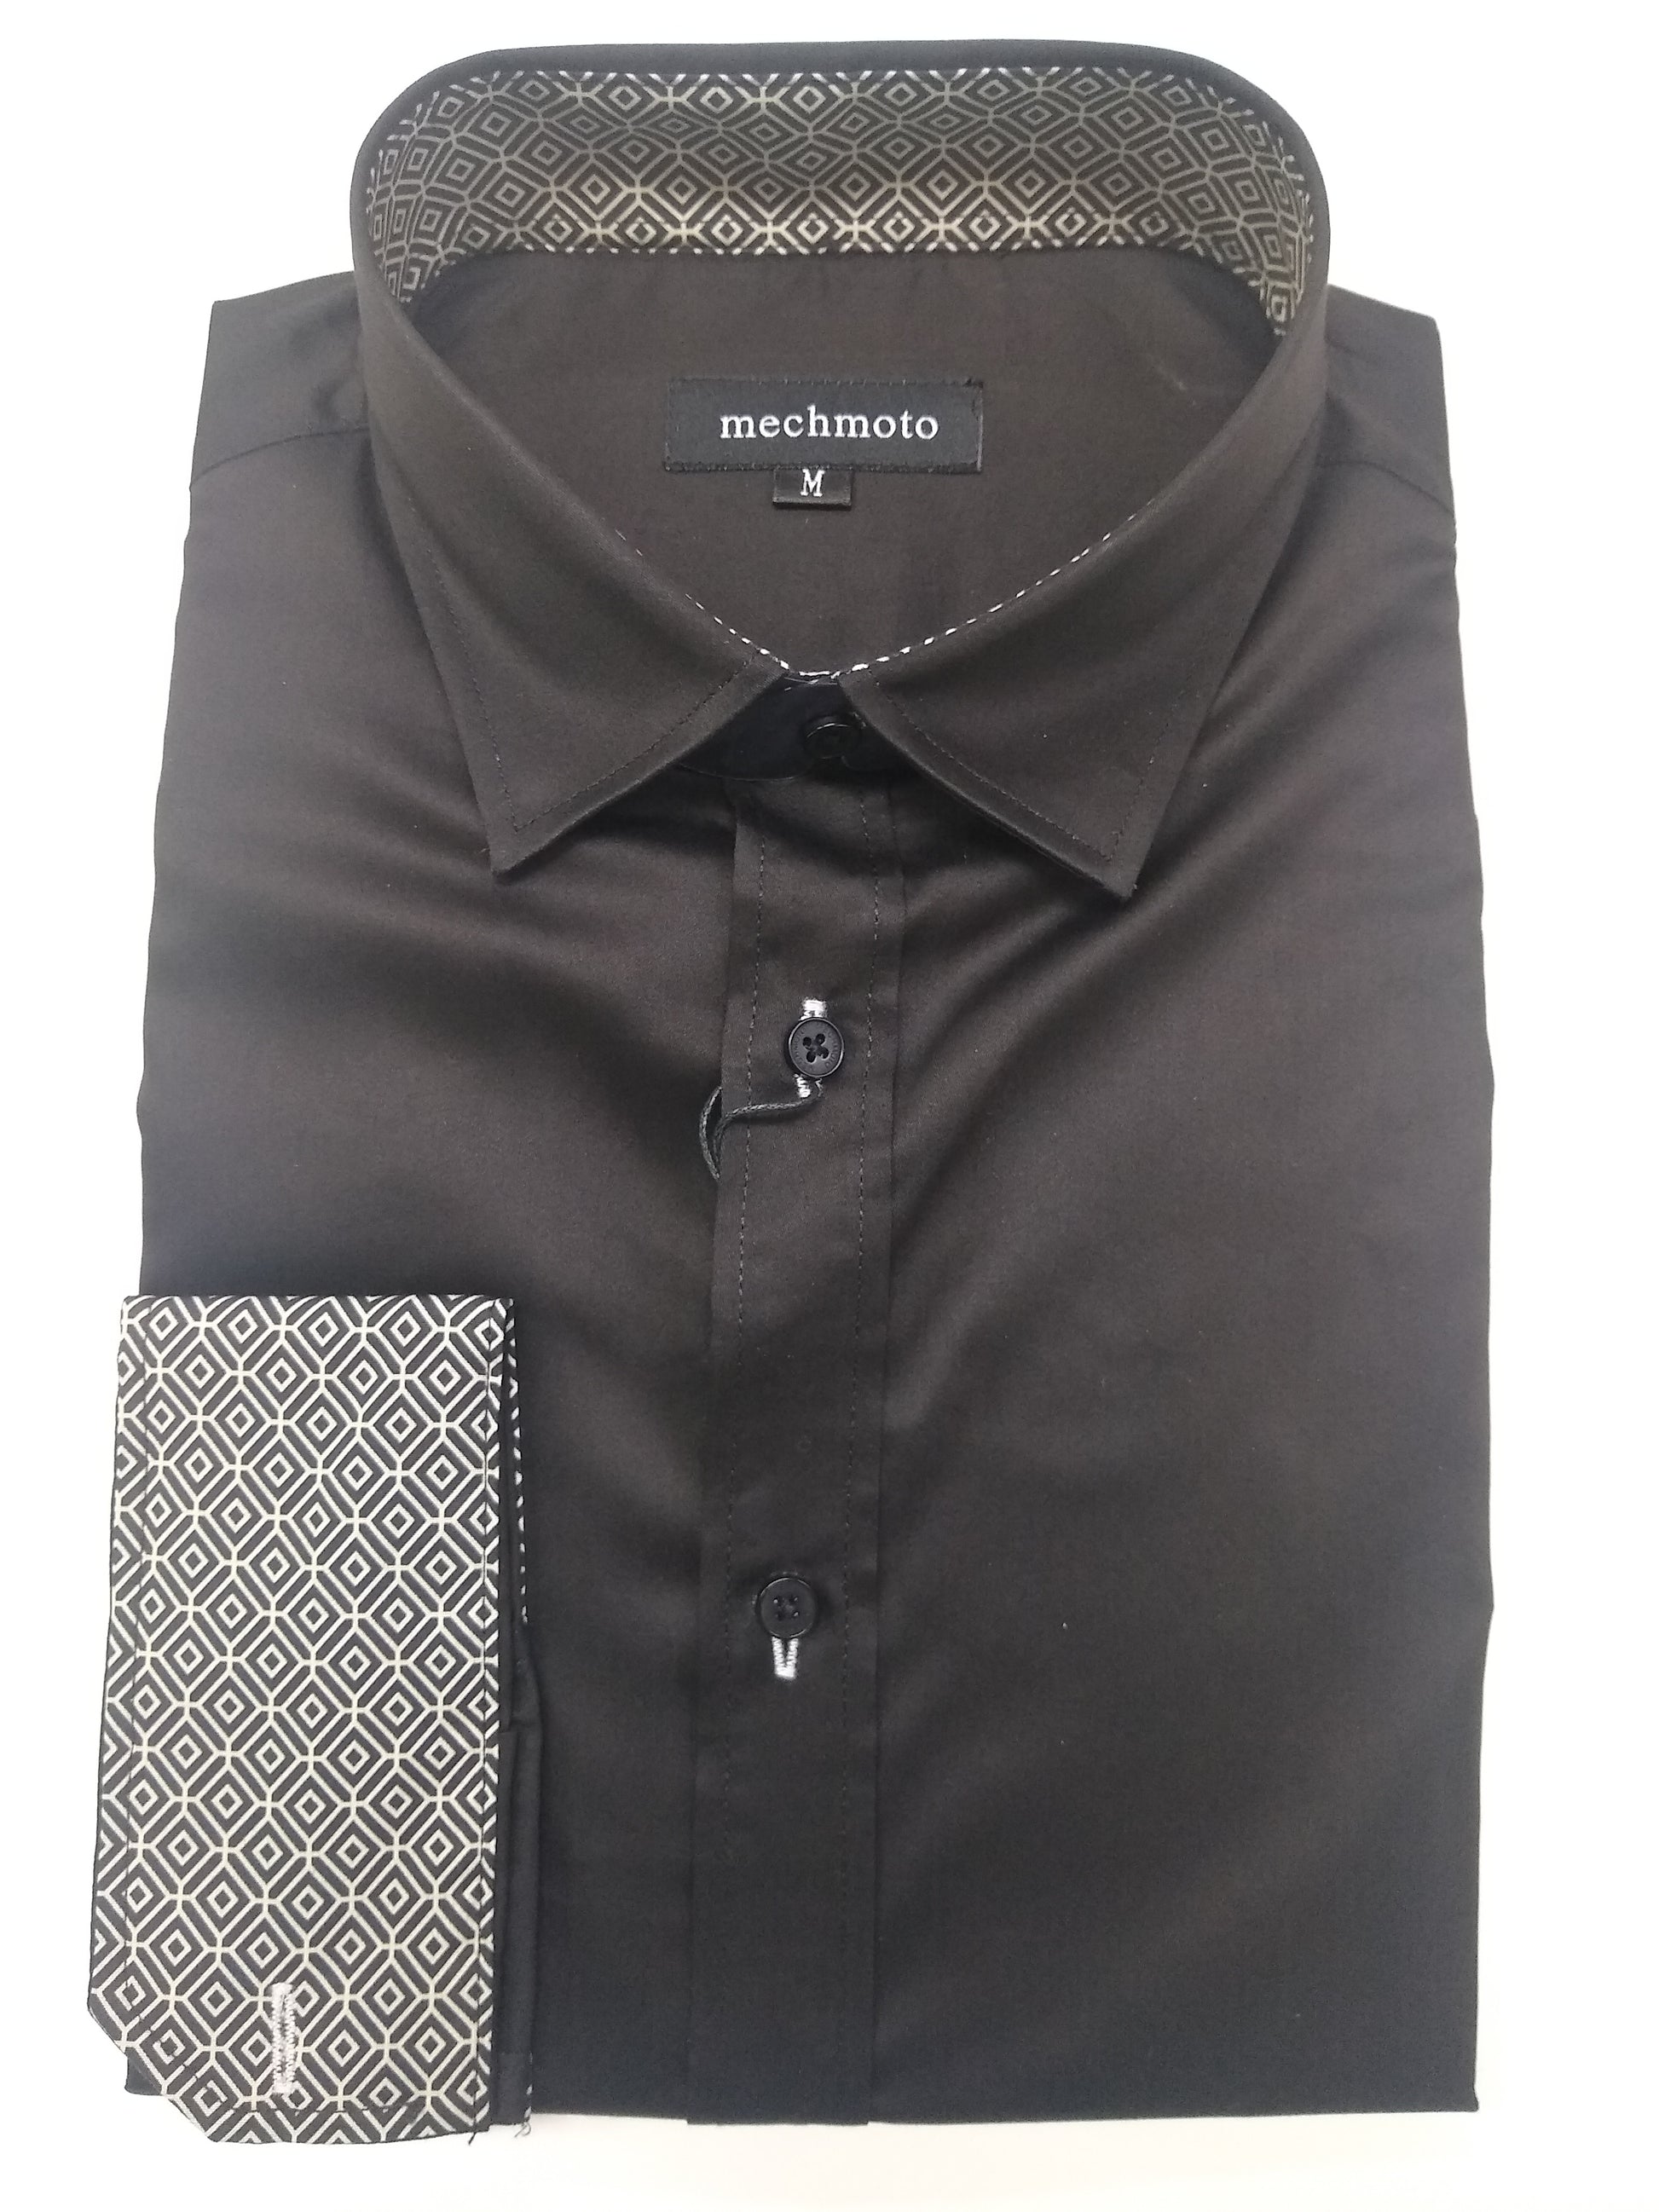 Mechmoto Black Stretch Long Sleeve Shirt